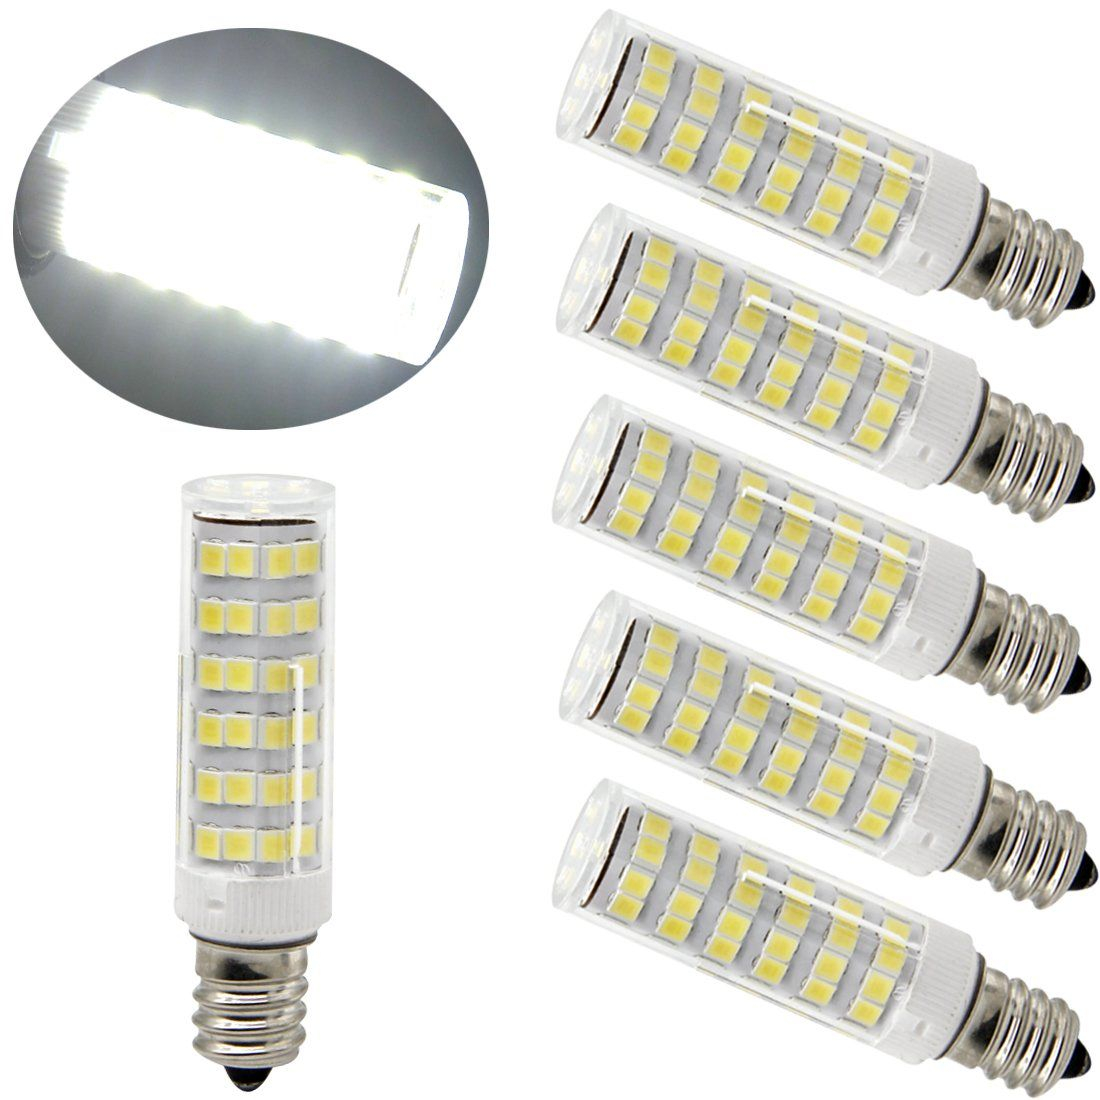 Ulight 6w E11 Led Light Bulb 60w 120v130v Halogen Bulbs Equivalent inside measurements 1100 X 1100